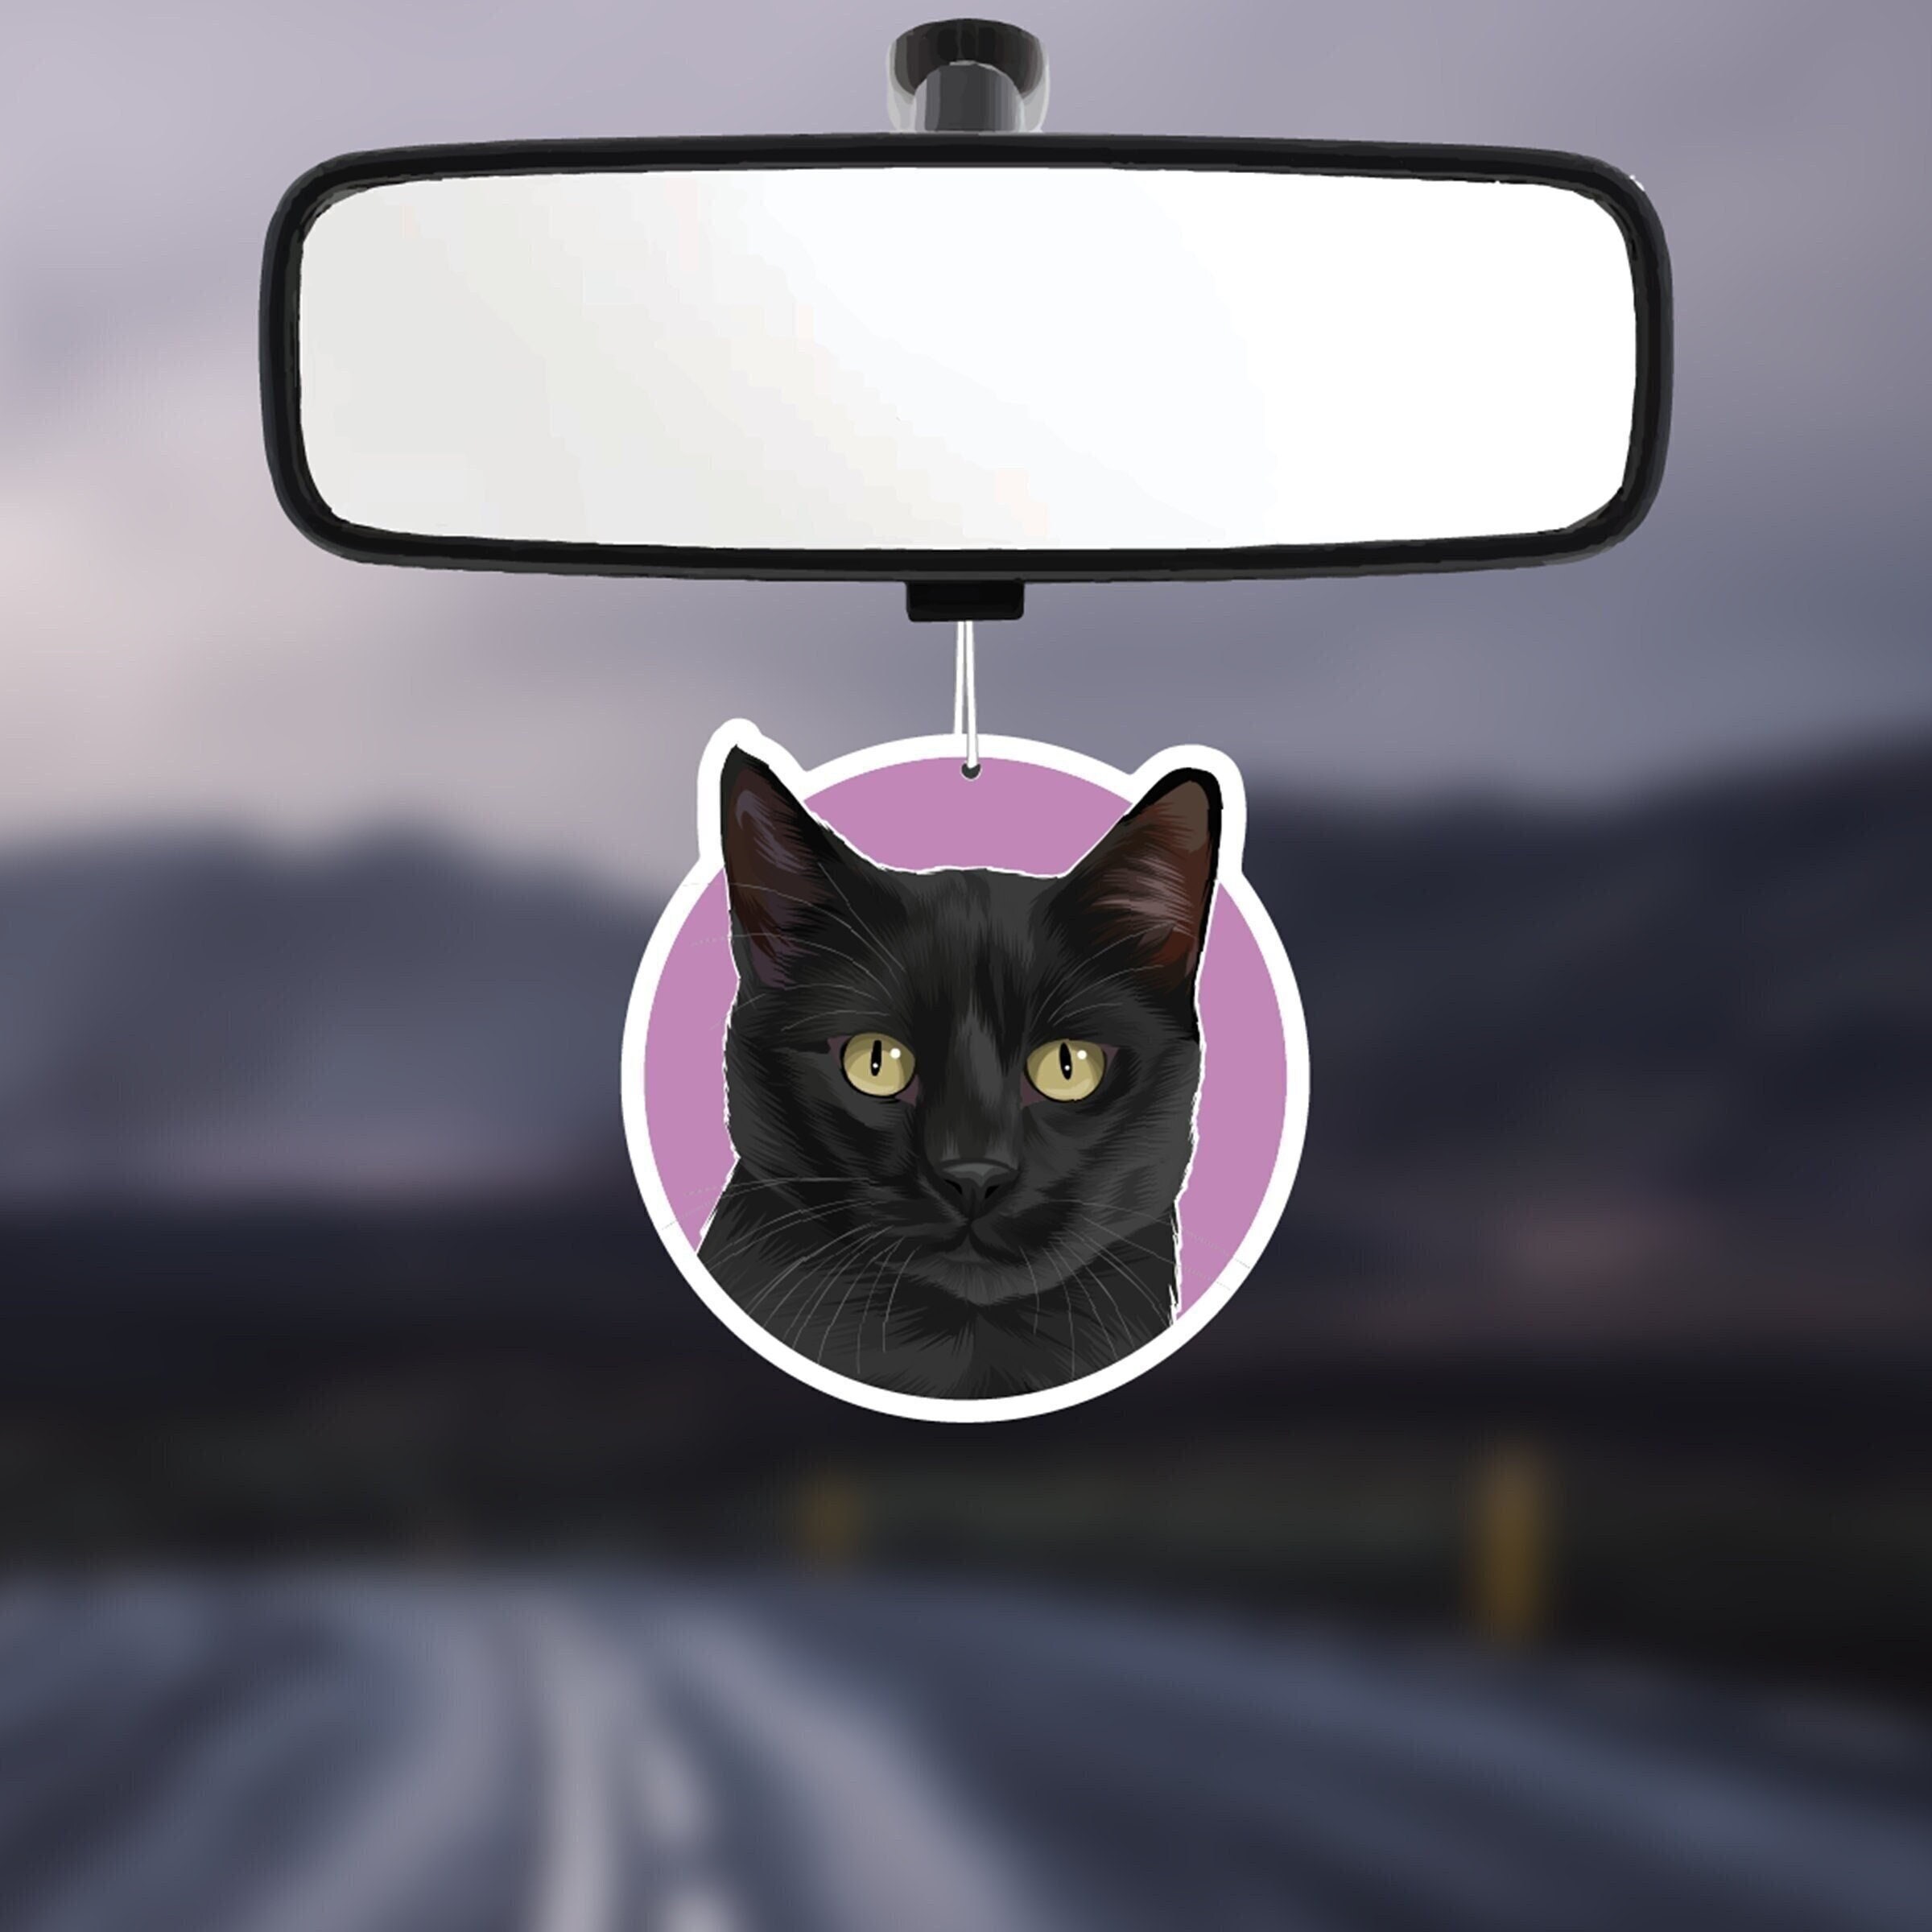 Cat Car Charm 